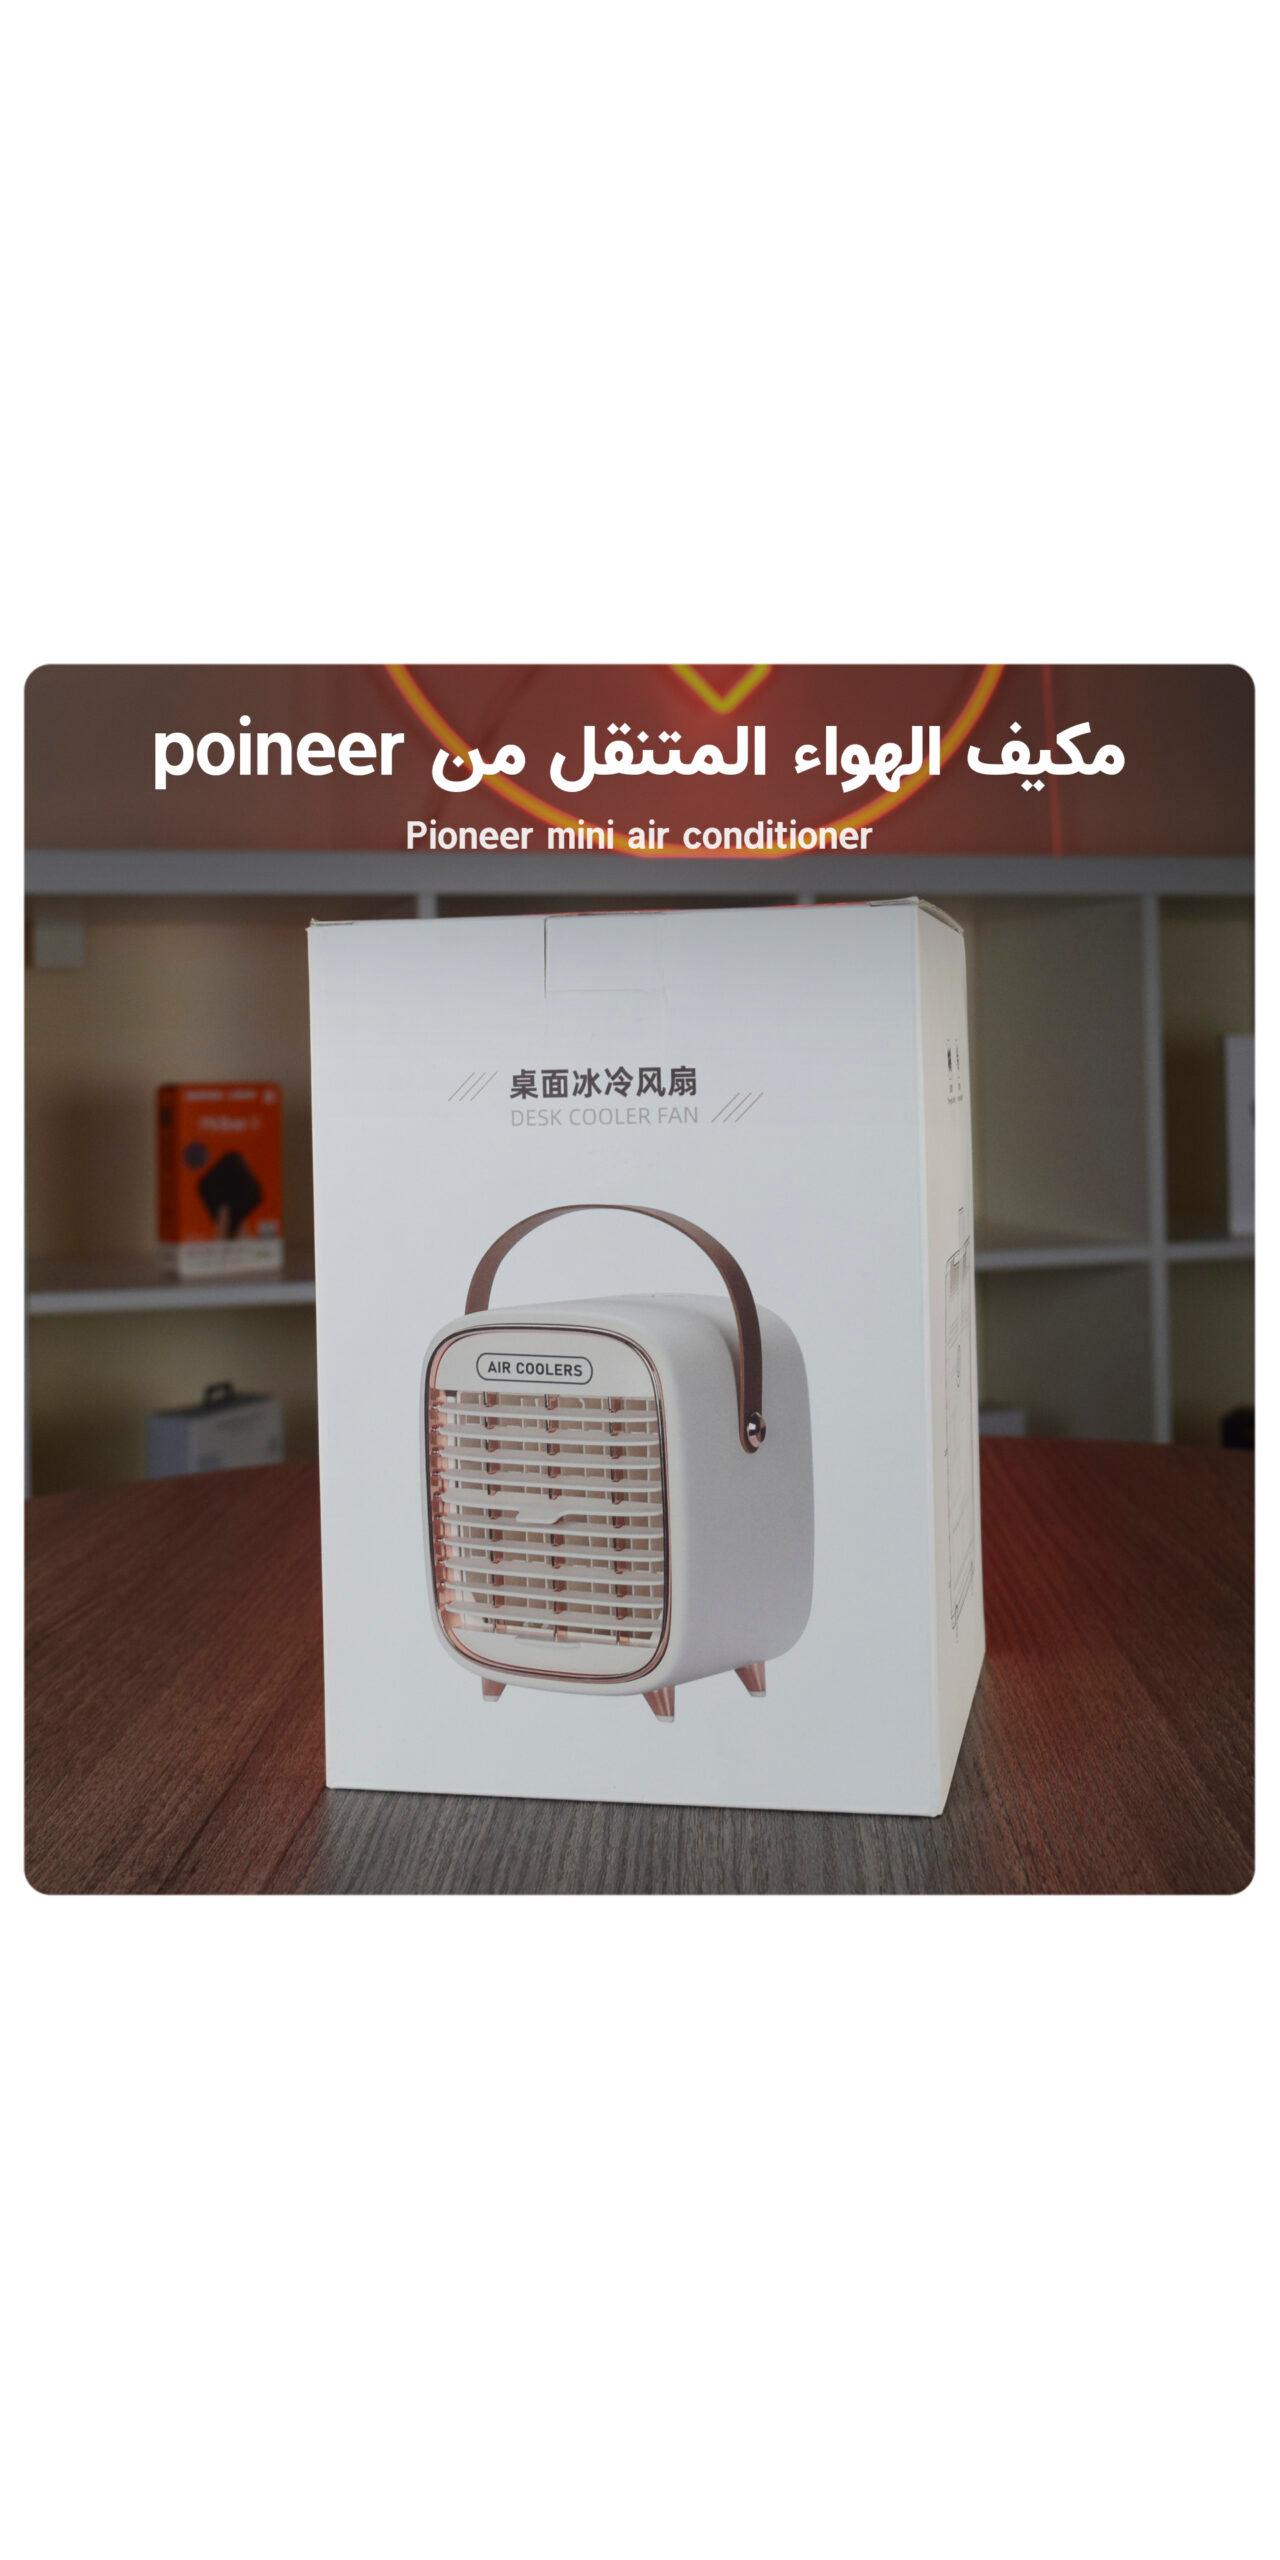 Pioneer Poineer Portable Mini Air Cooler